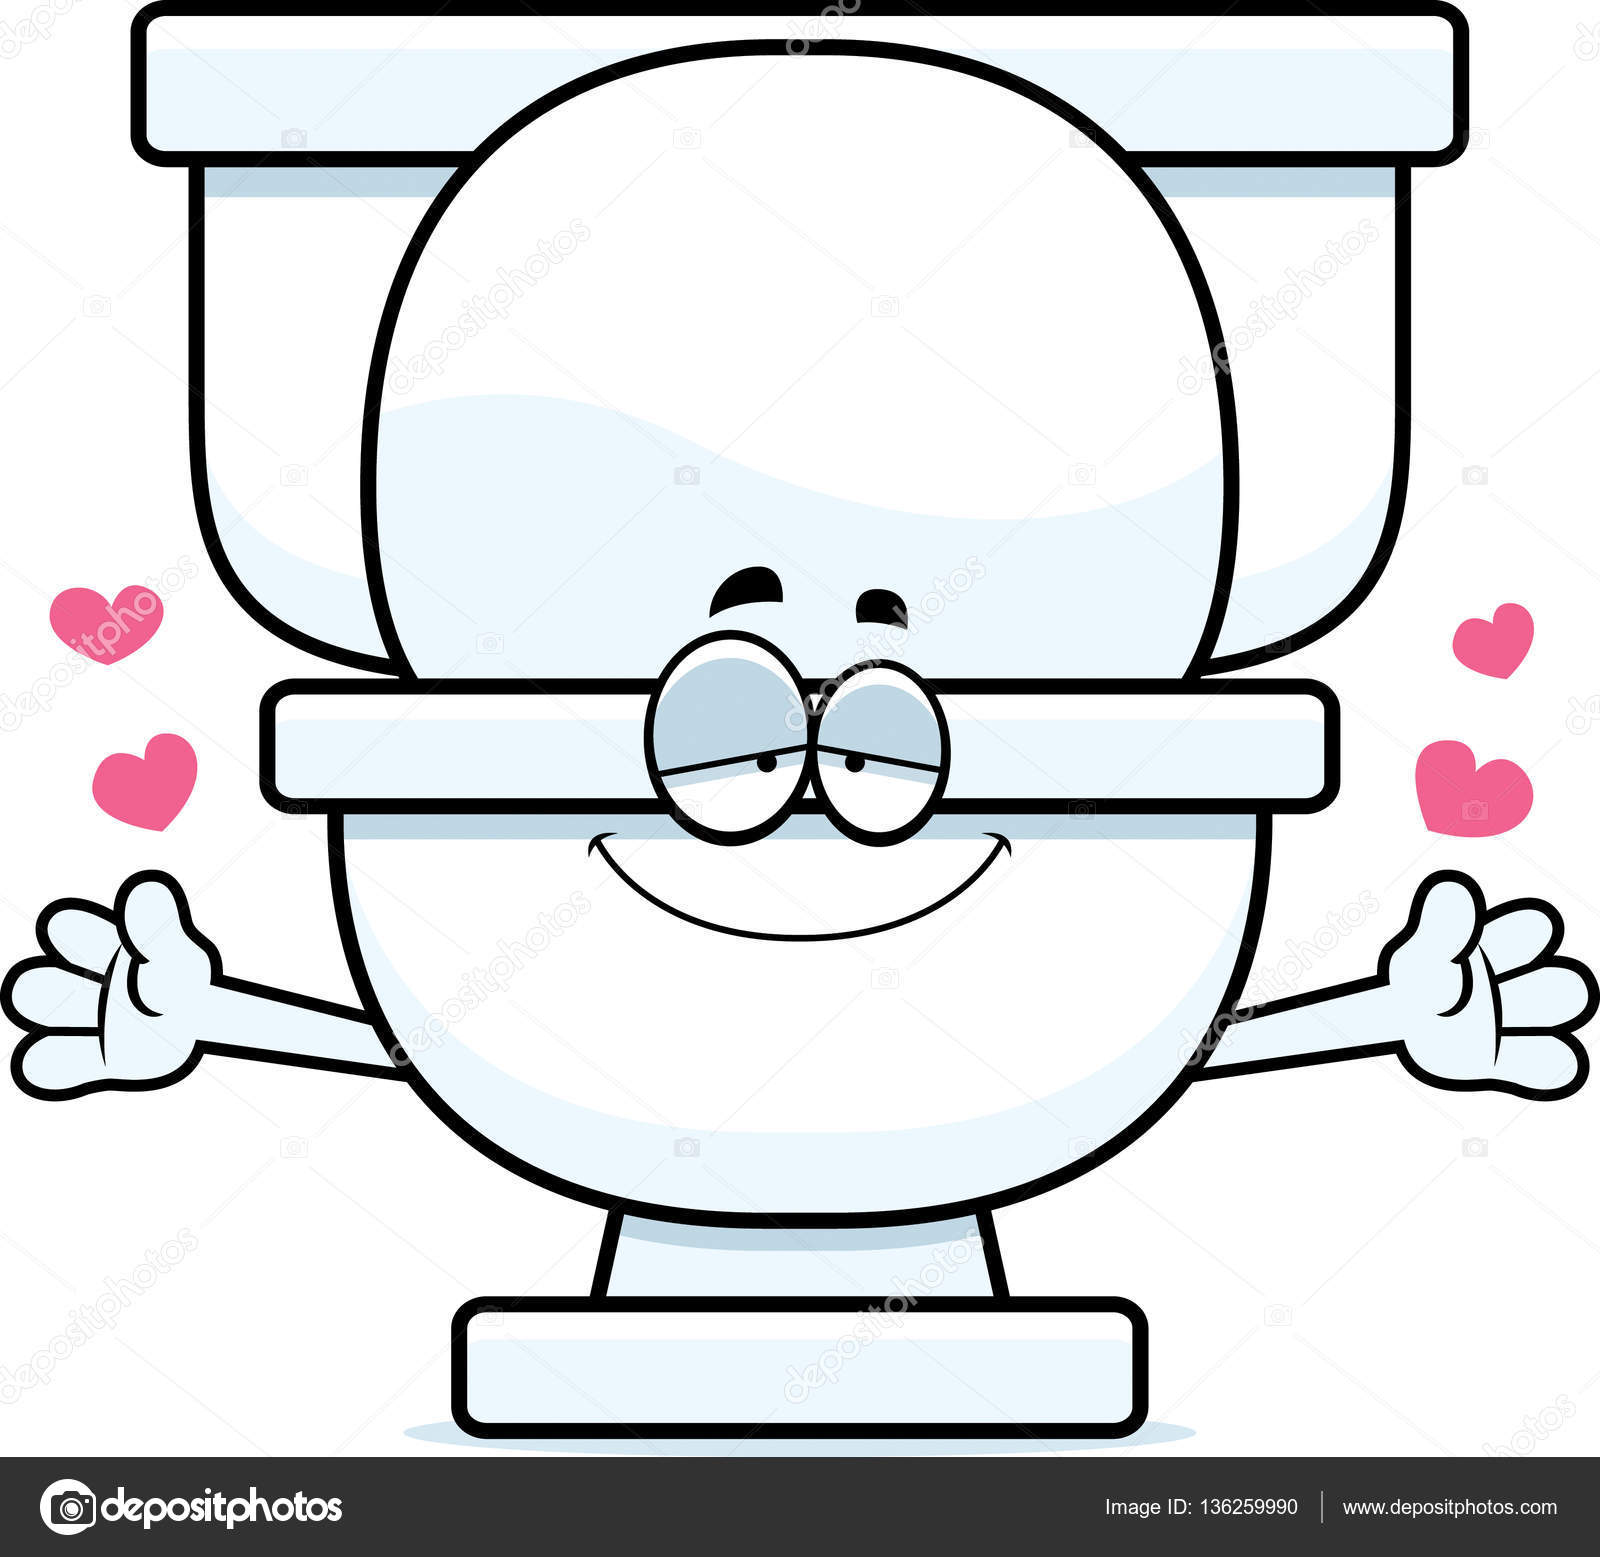  Cartoon  Toilet  Hug  Stock Vector  cthoman 136259990